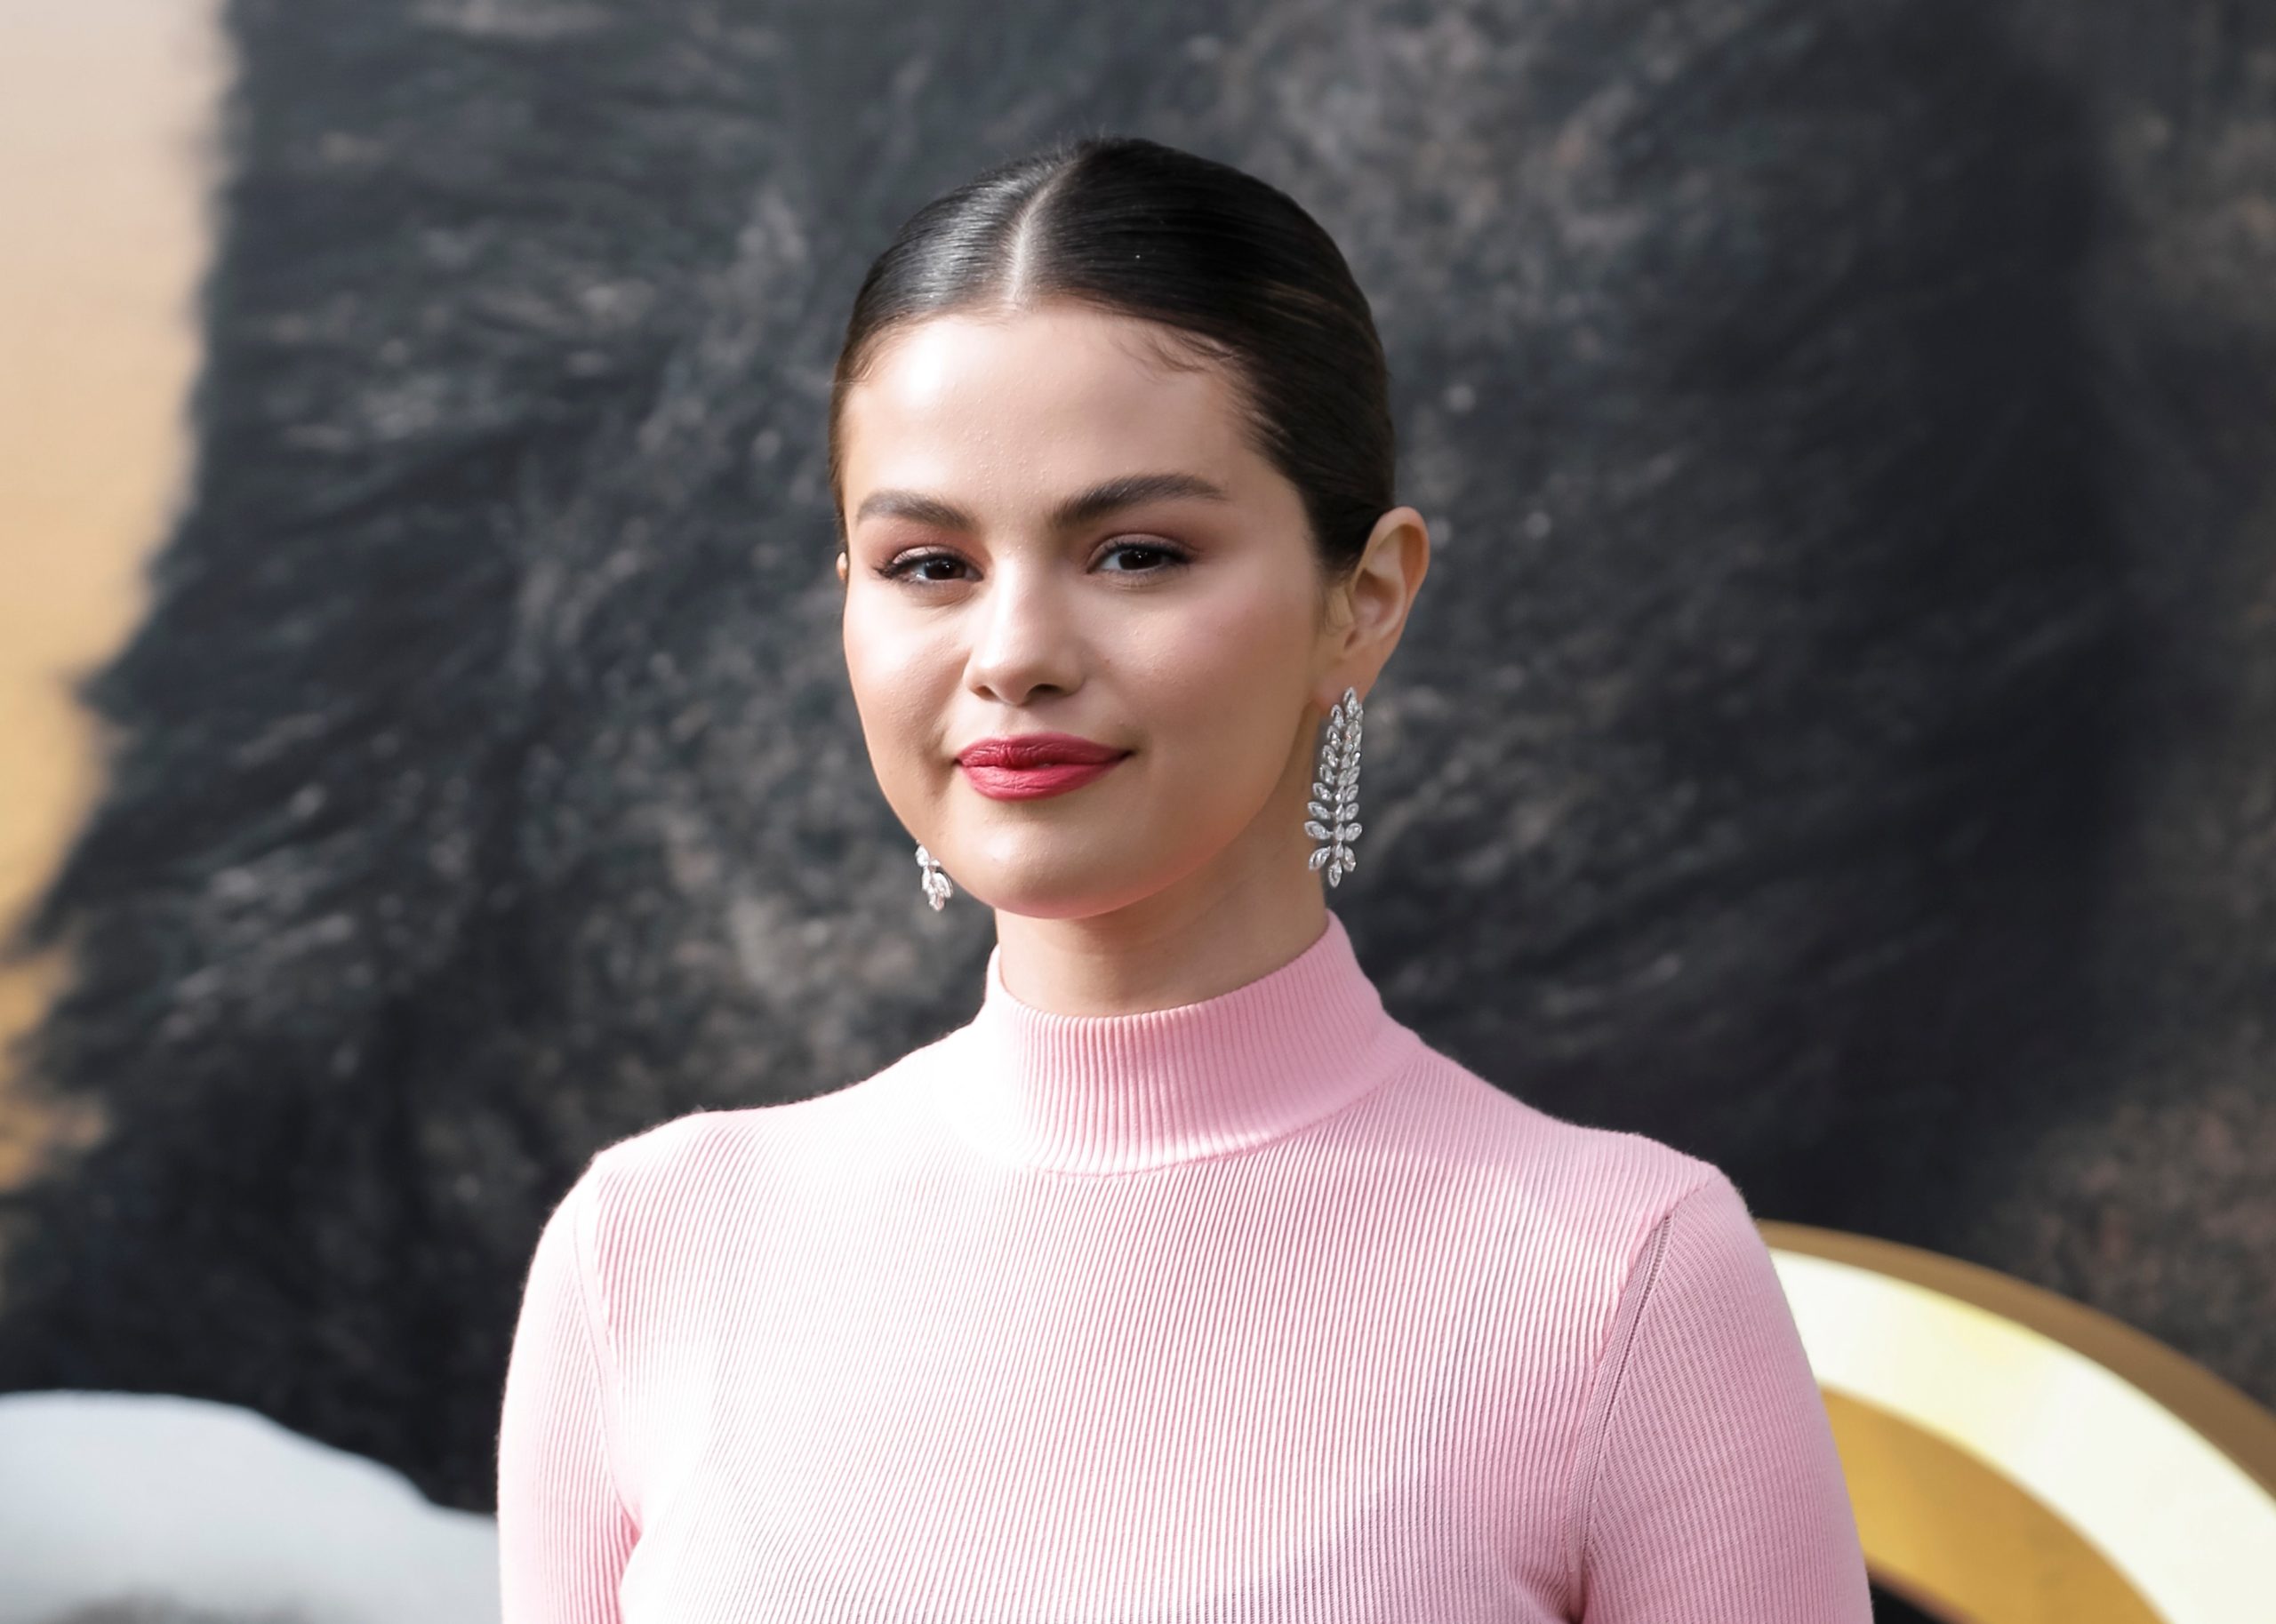 Selena Gomez Wardrobe Malfunction At 2018 Met Gala Self-Tanning – Star Finally Opens Up!